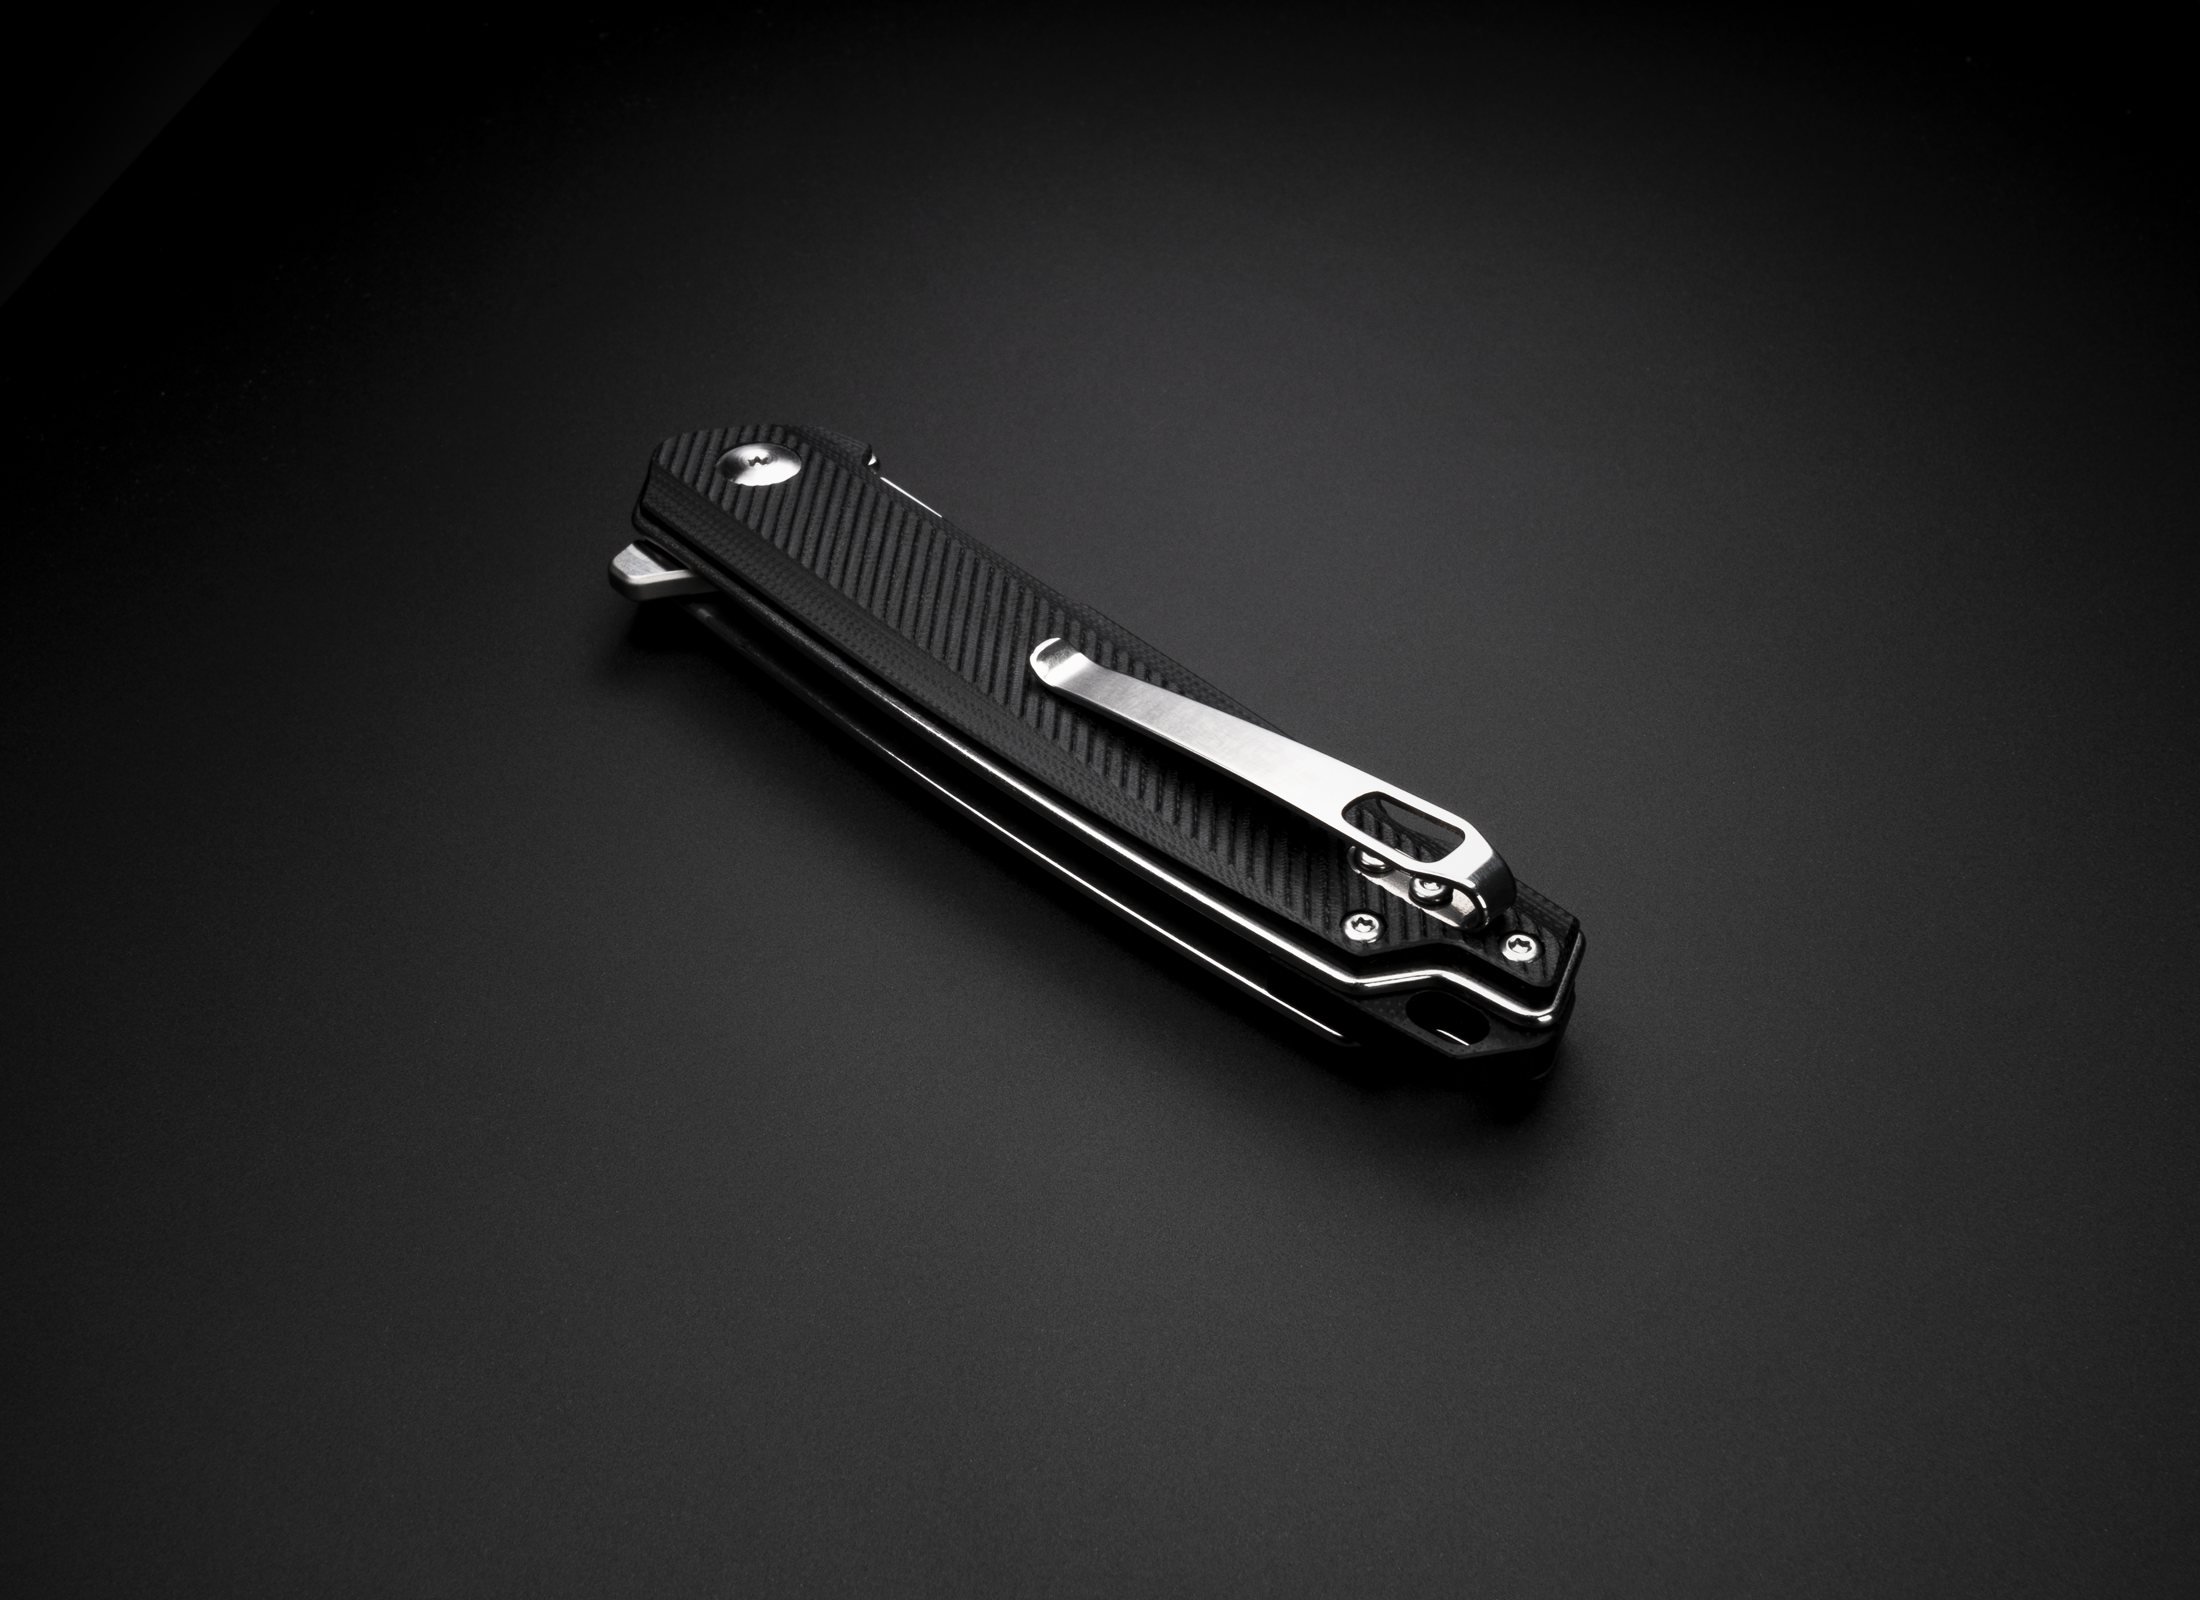 The Bellum by Korcraft Black pocket knife closed with pocket clip on black background